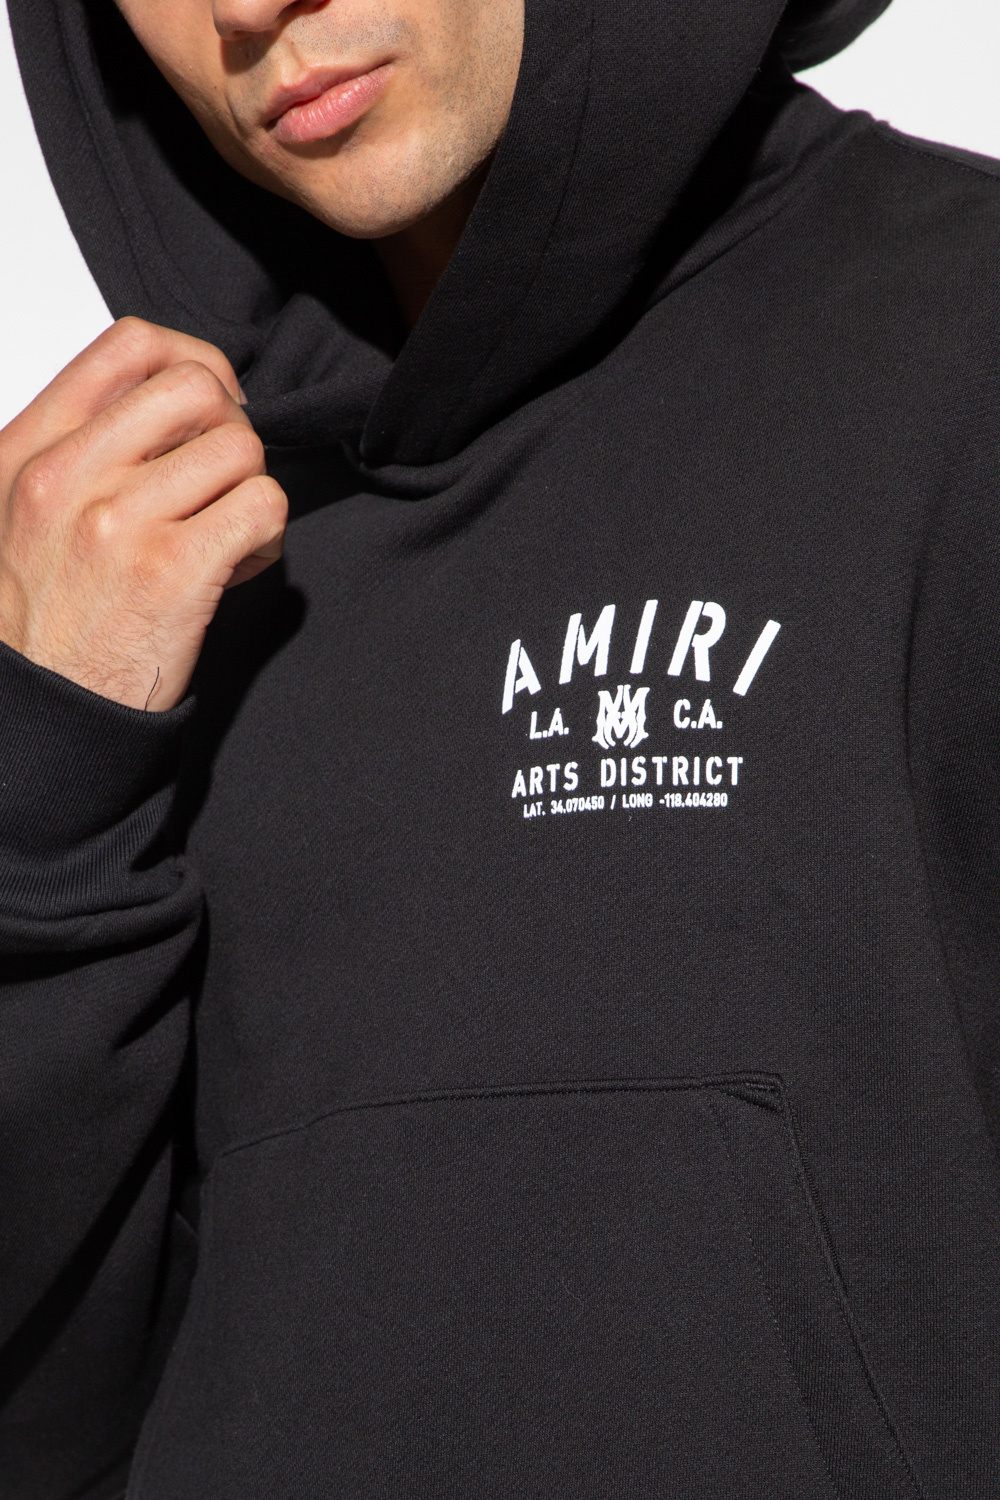 Men's AMIRI Sweatshirts & Hoodies